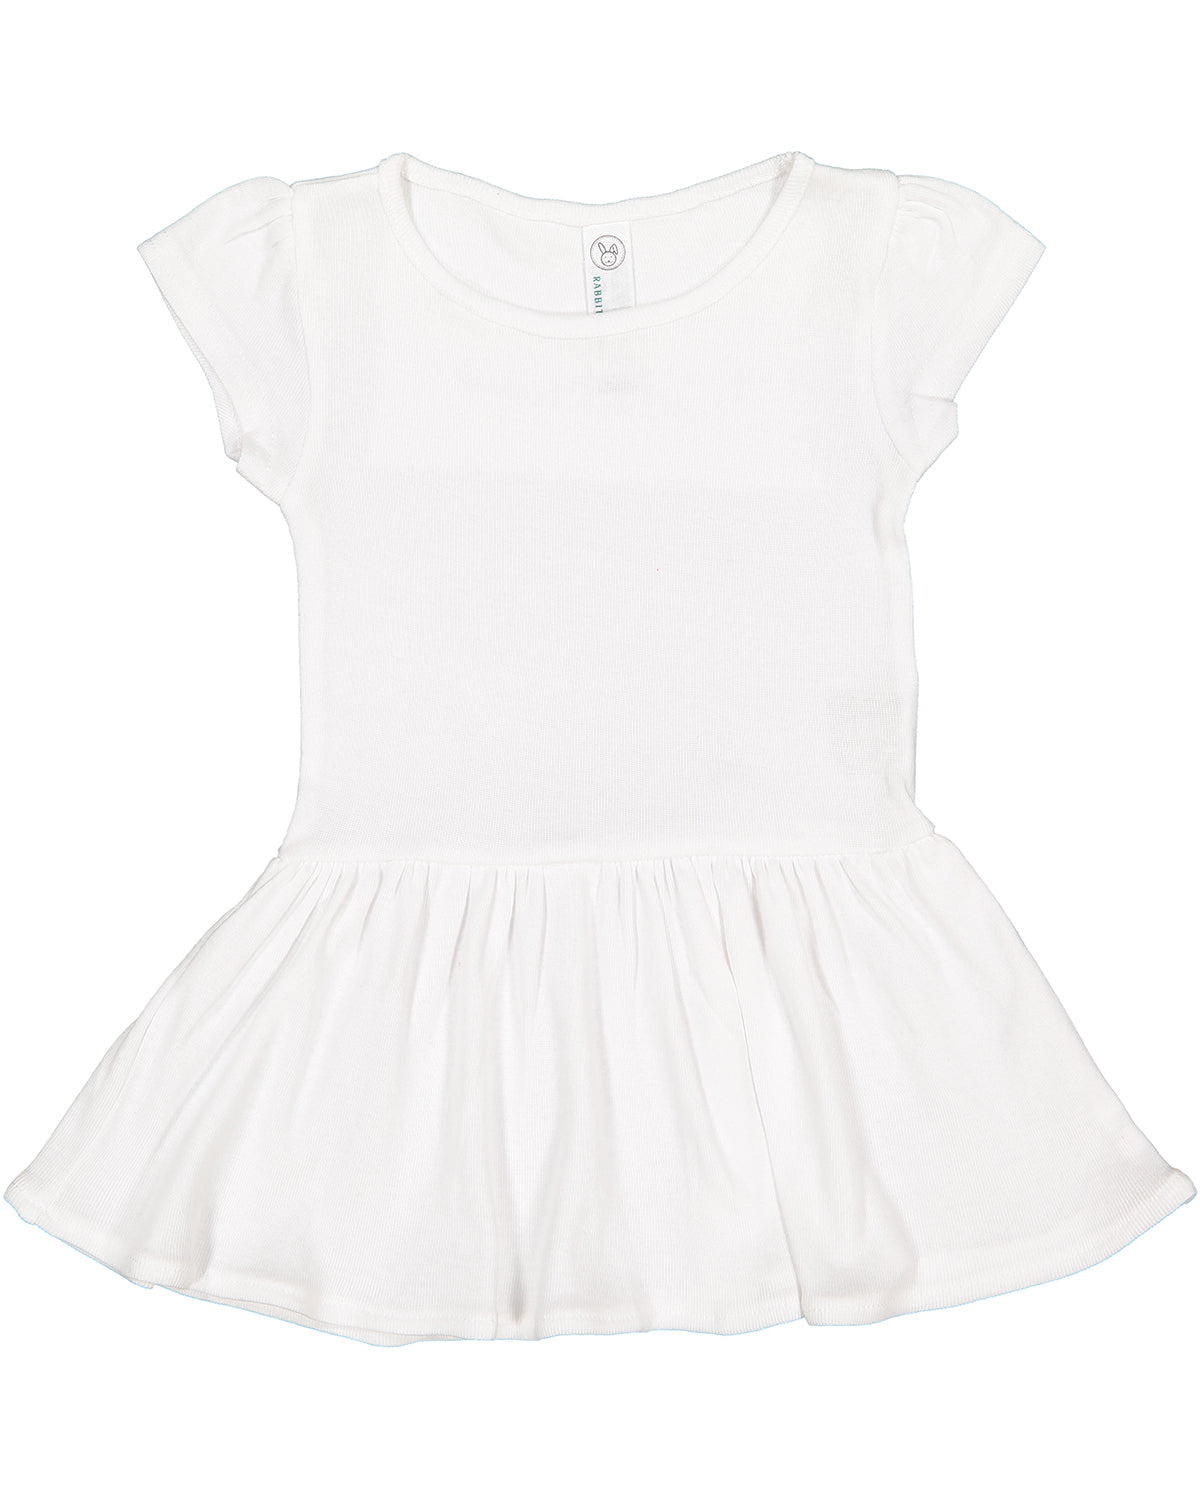 Baby Cotton Rib Dress, (Sizes: 6M - 24M), White